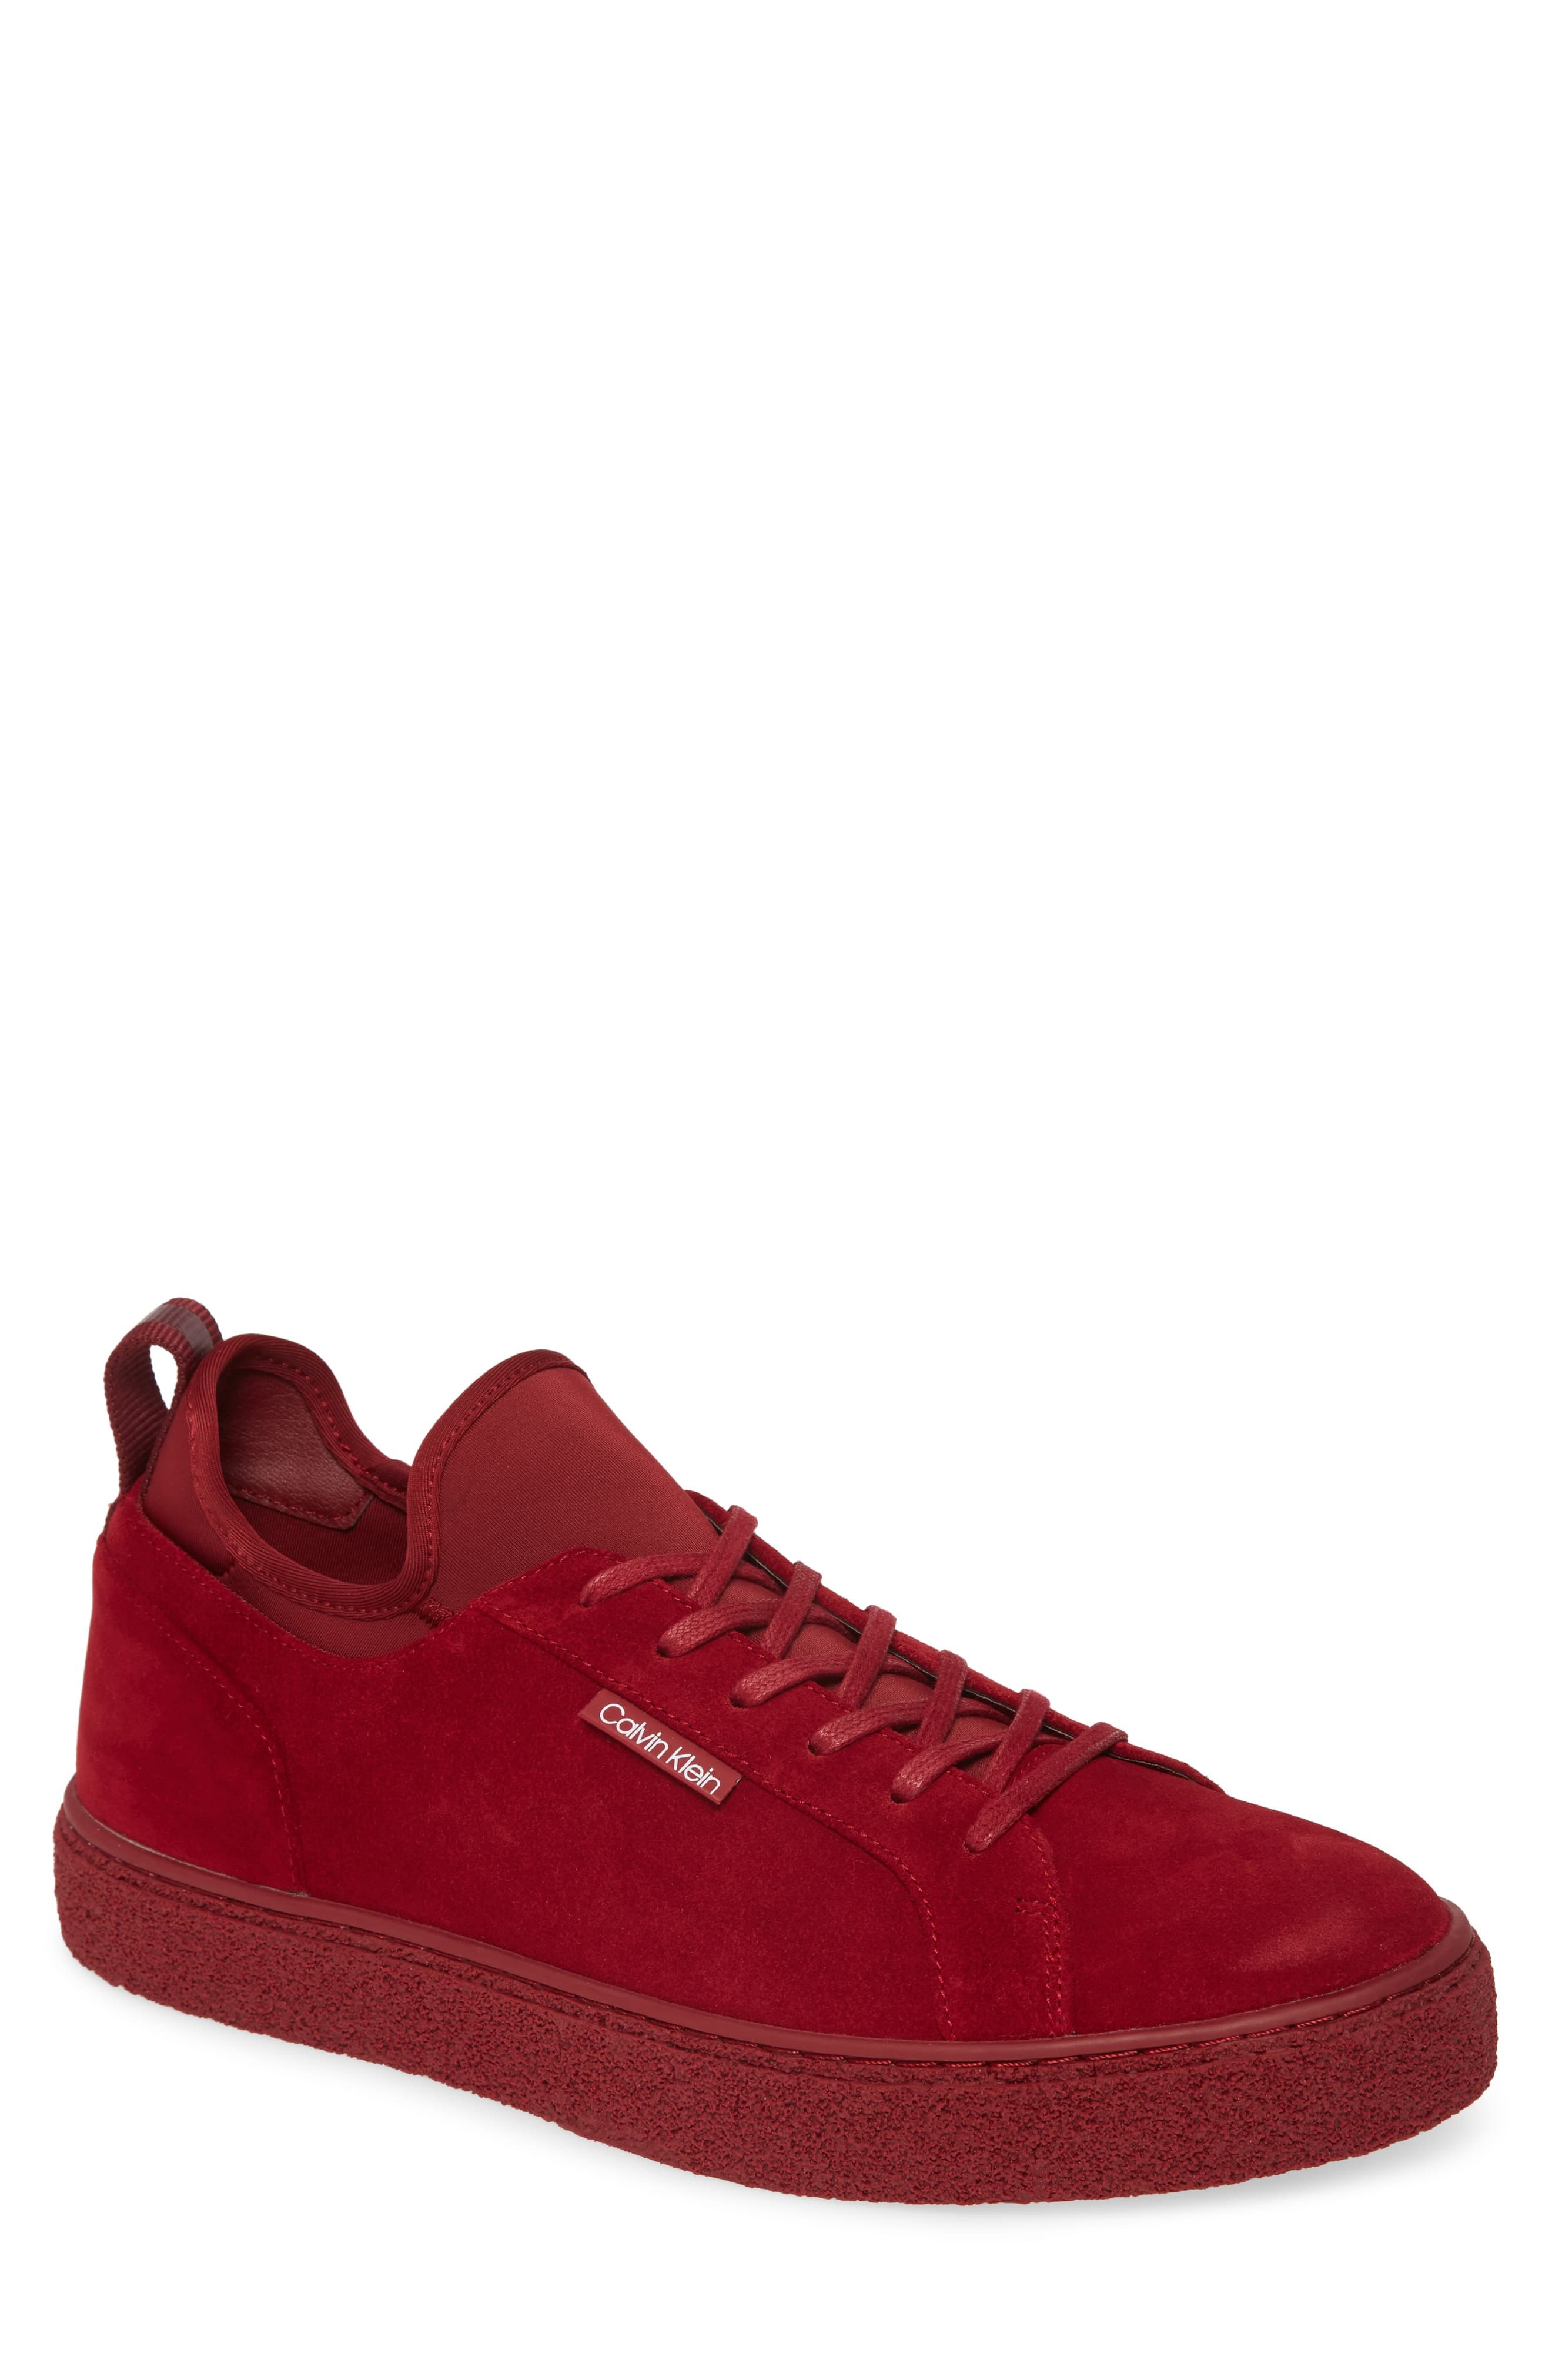 calvin klein red sneakers